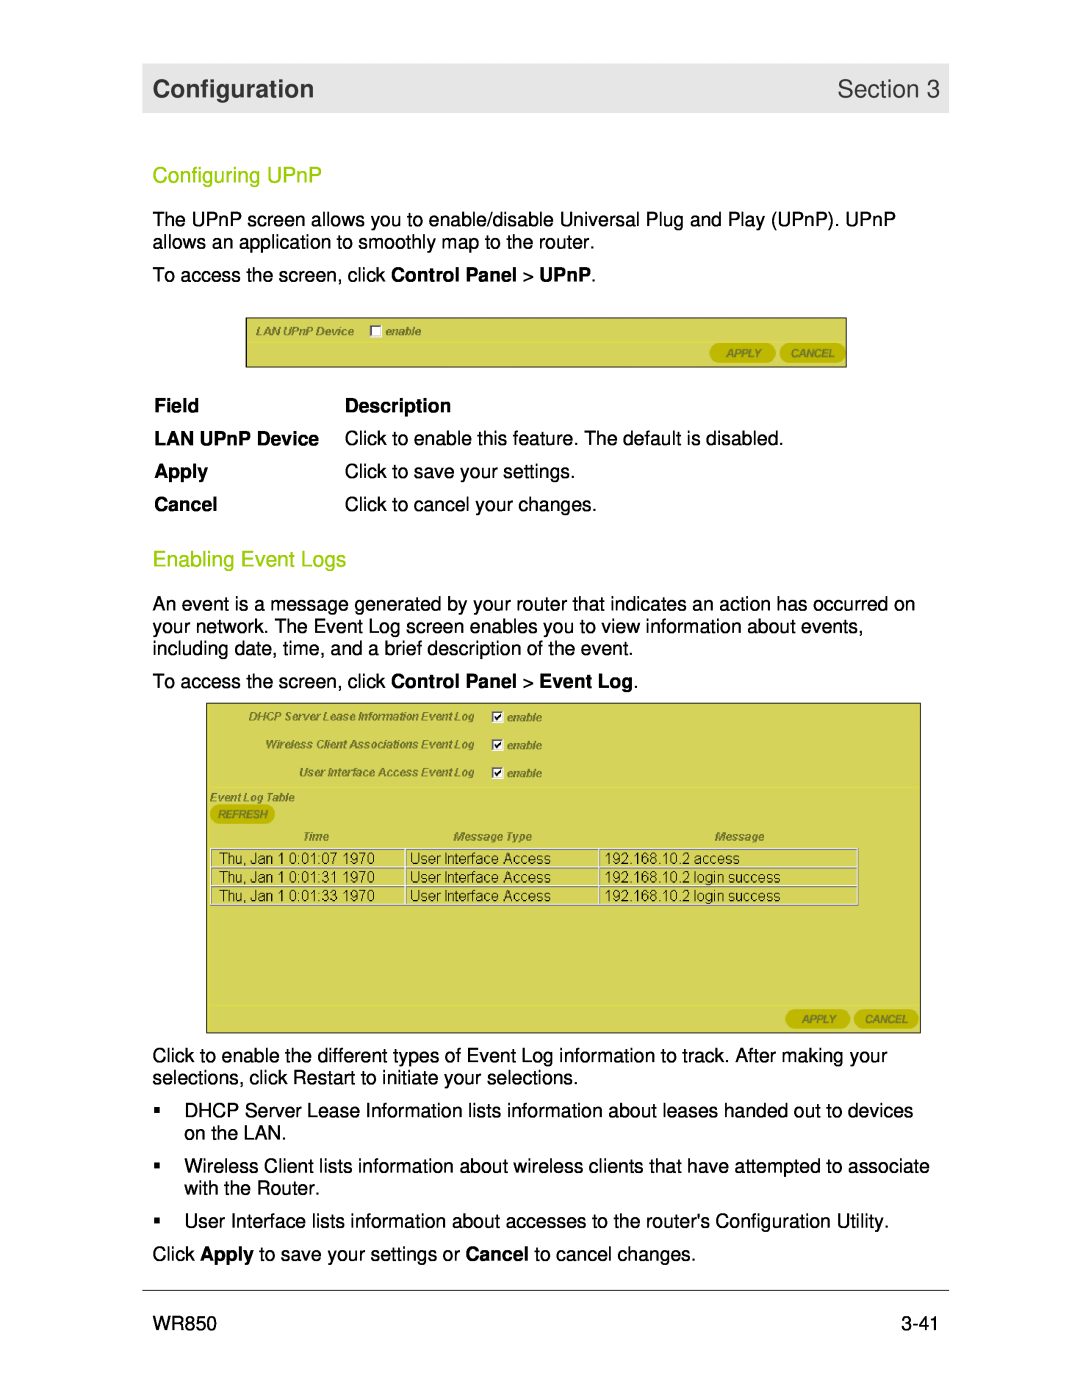 Motorola WR850 manual Configuring UPnP, Enabling Event Logs, Configuration, Section 